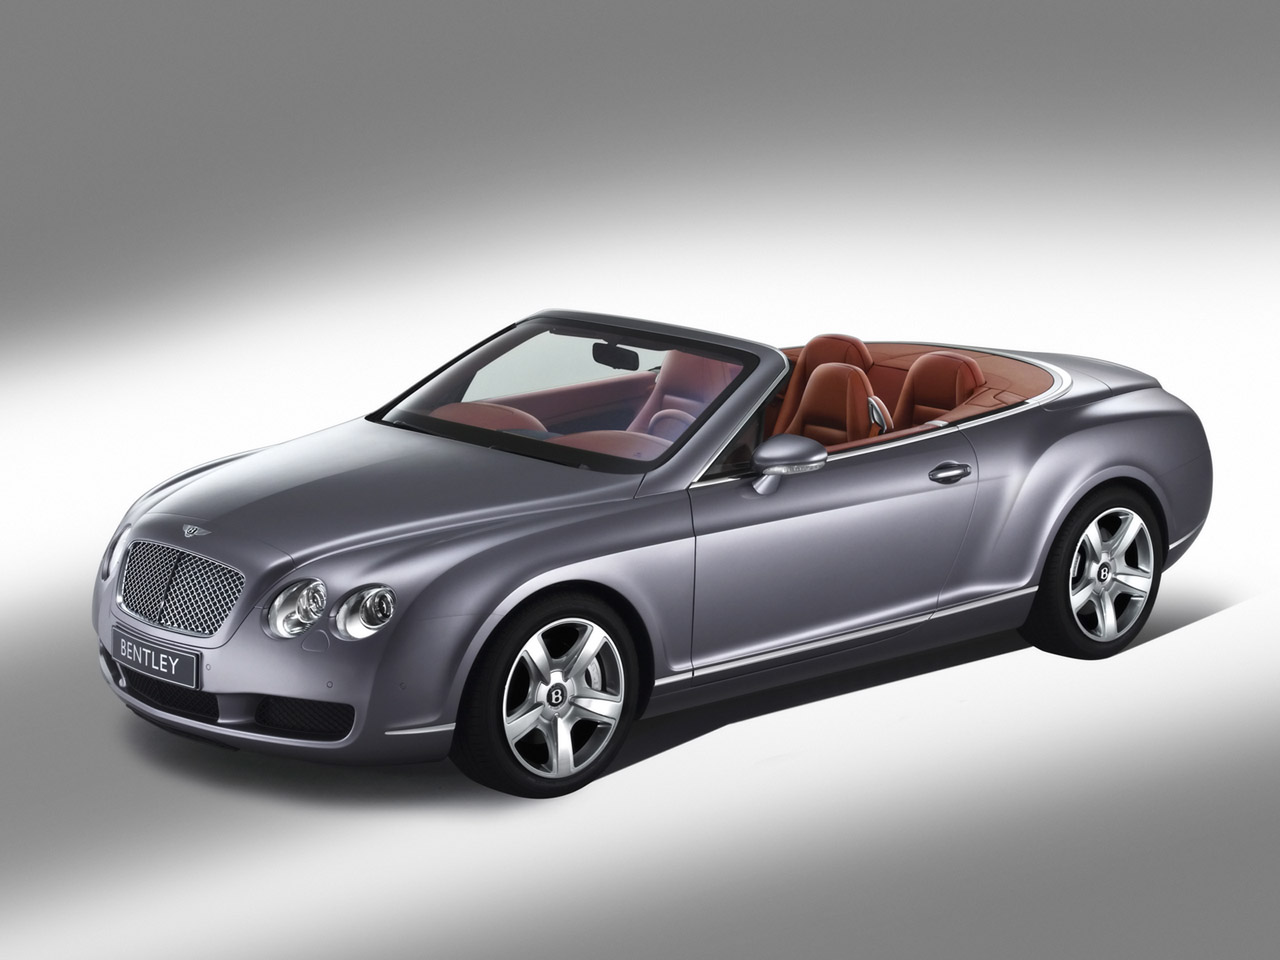 2006-Bentley-Continental-GTC-SA-Top-1280x960.jpg